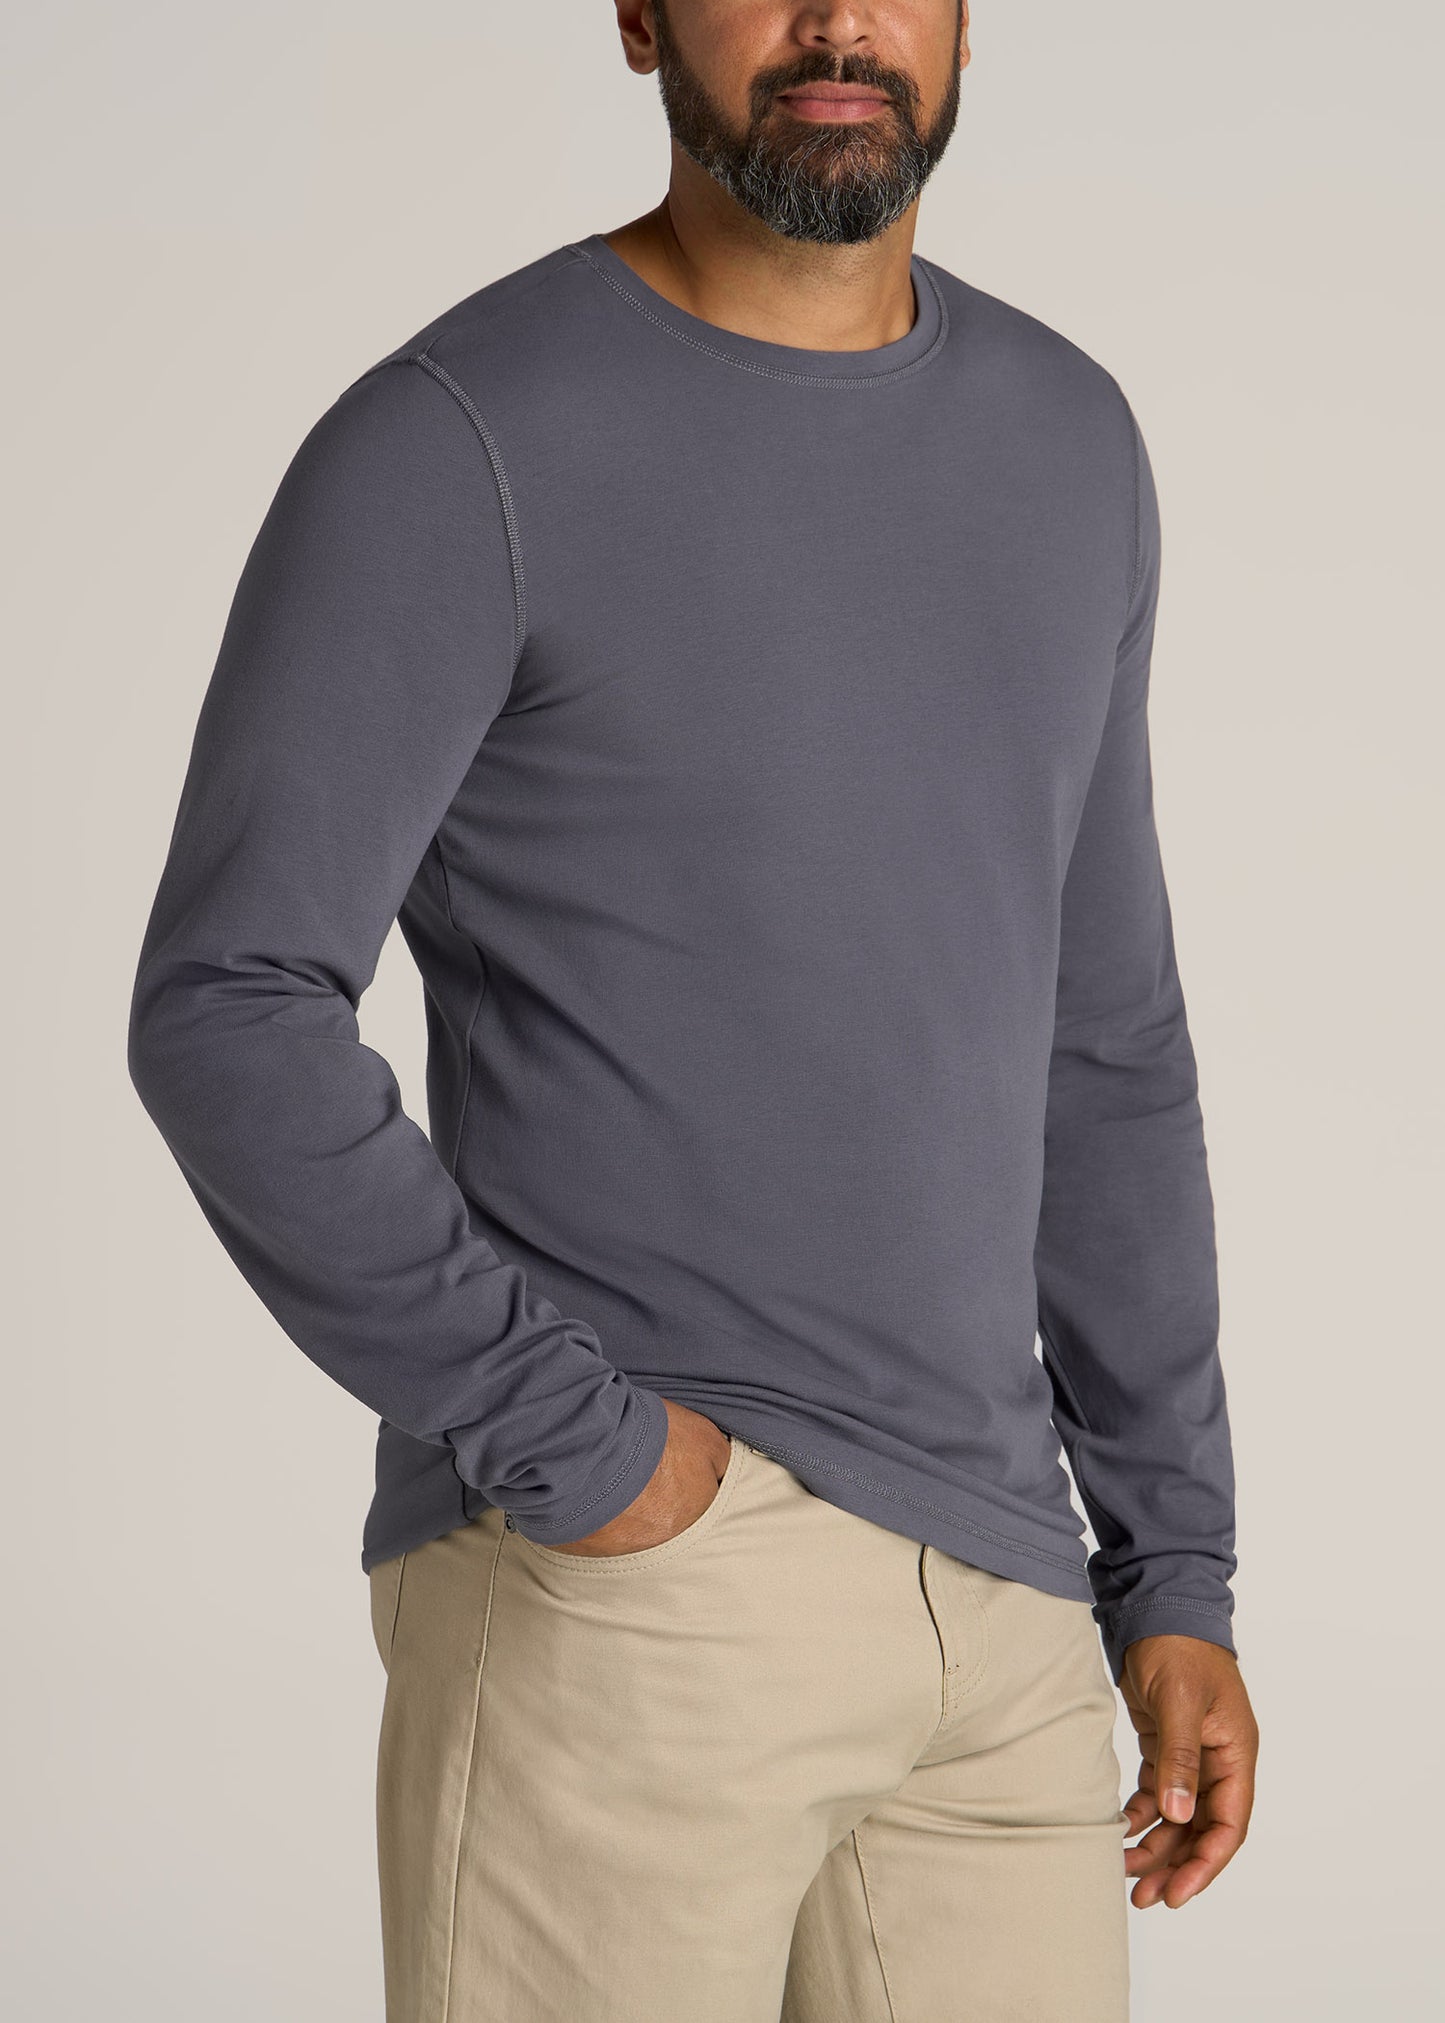 Lou Grey Denim slim fit shirt - Extra Long Sleeves - Grey - Male